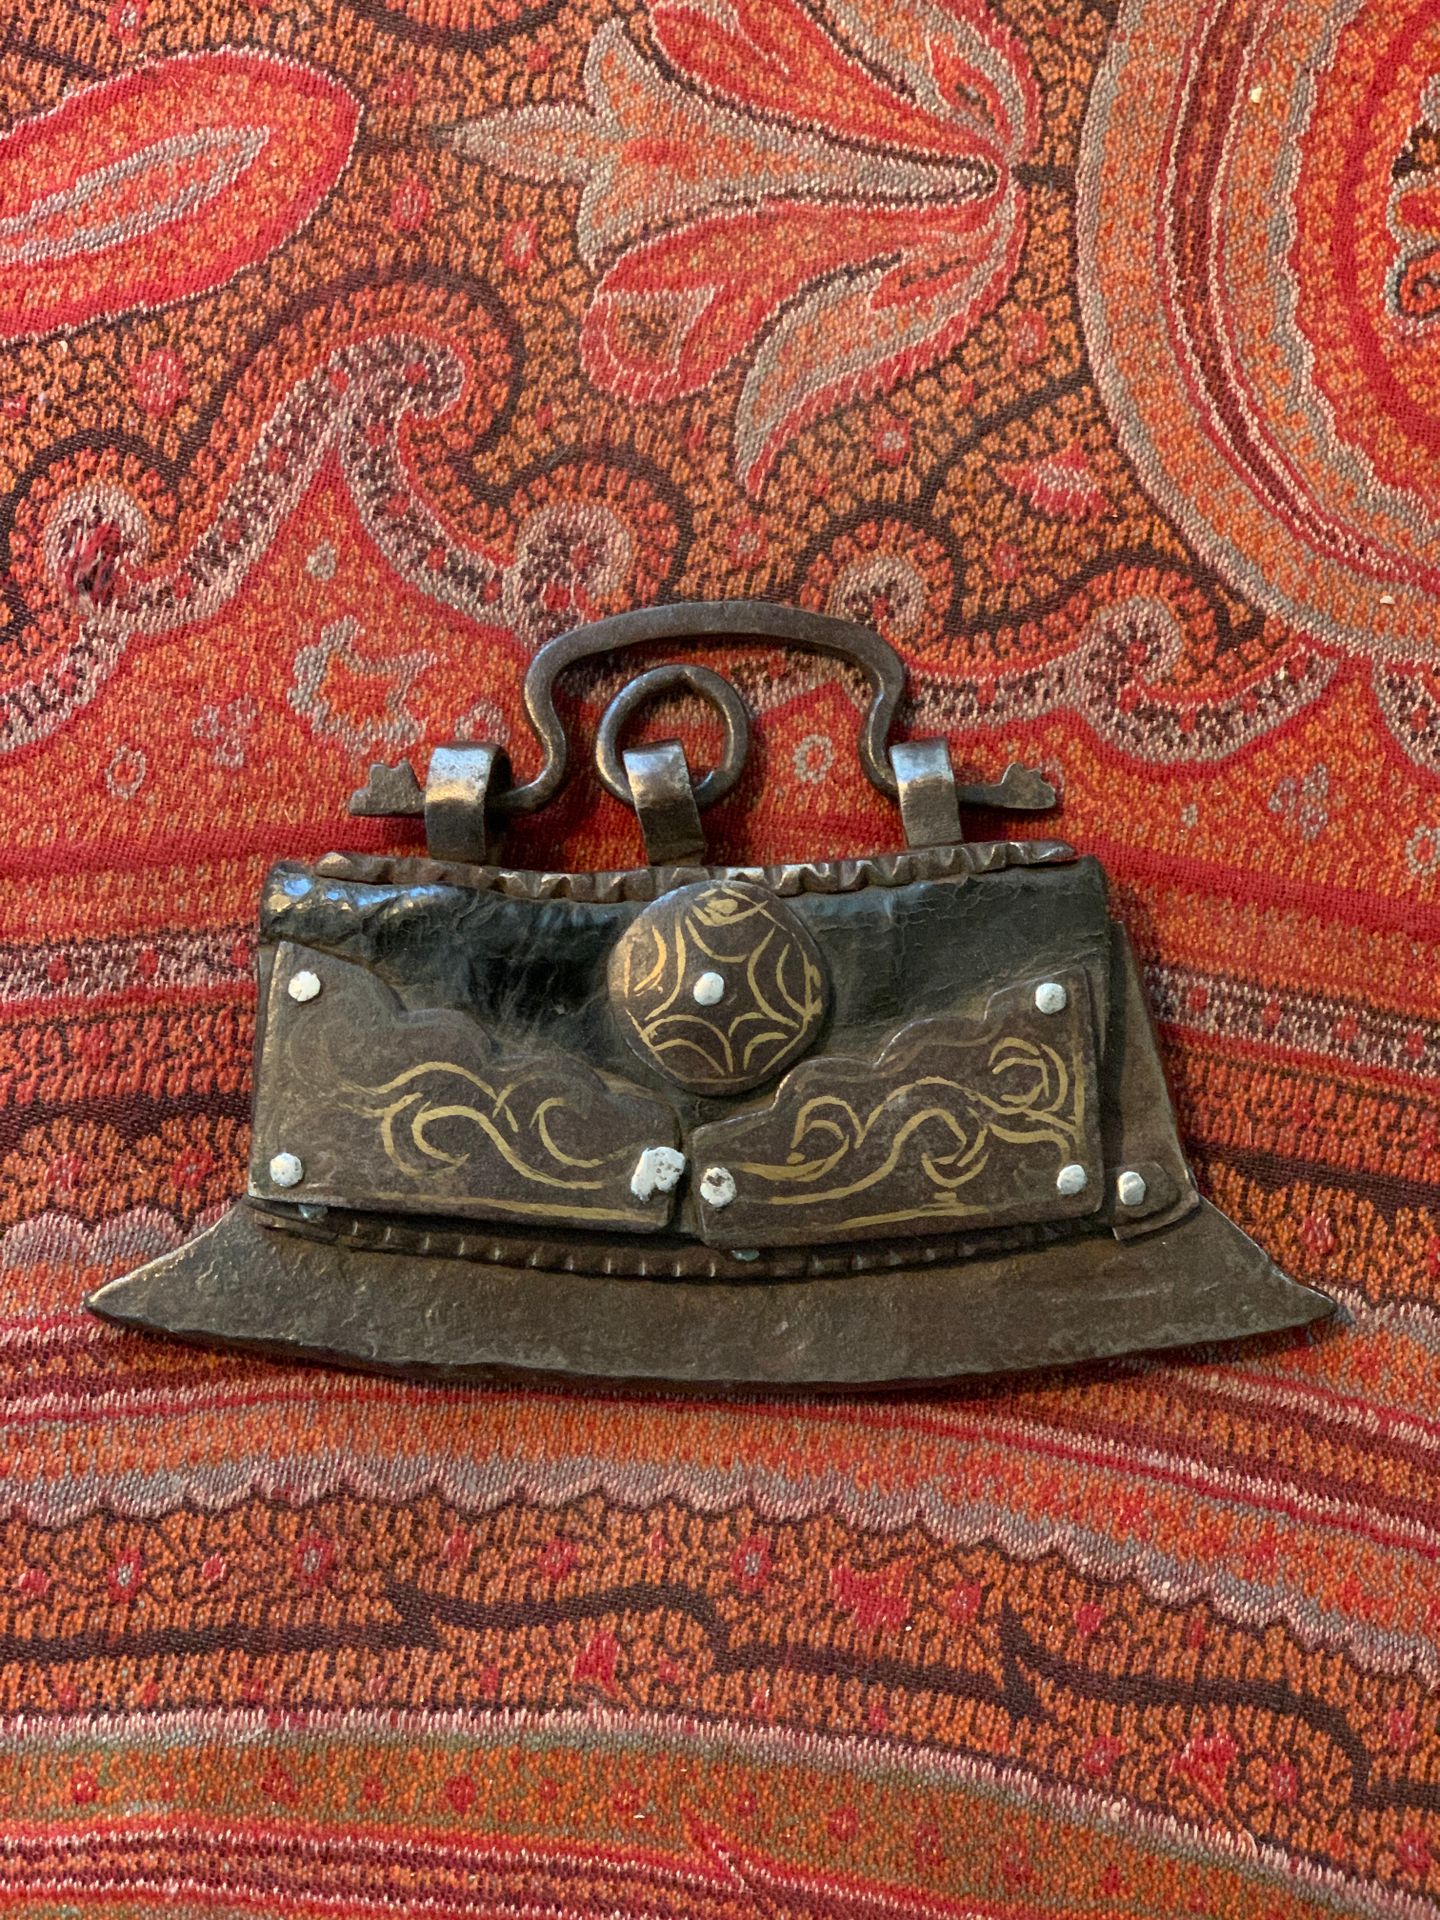 Null 藏式打火机，钢制，镶嵌黄金和皮革。

西藏，19世纪

长度：14.5厘米